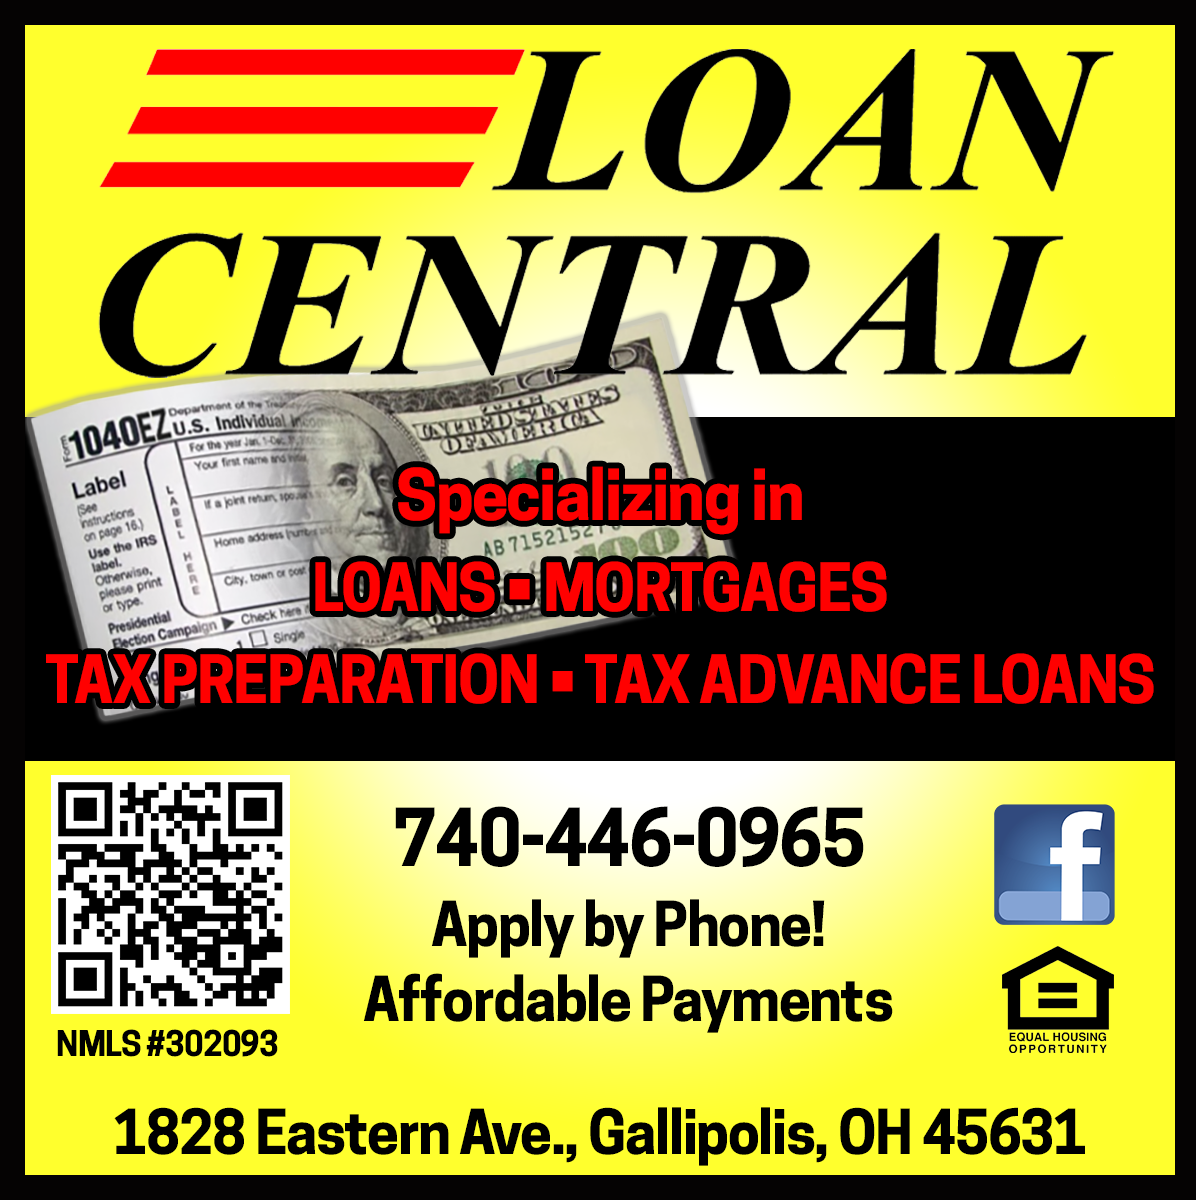 Loan Central 1828 Eastern Ave, Gallipolis Ohio 45631